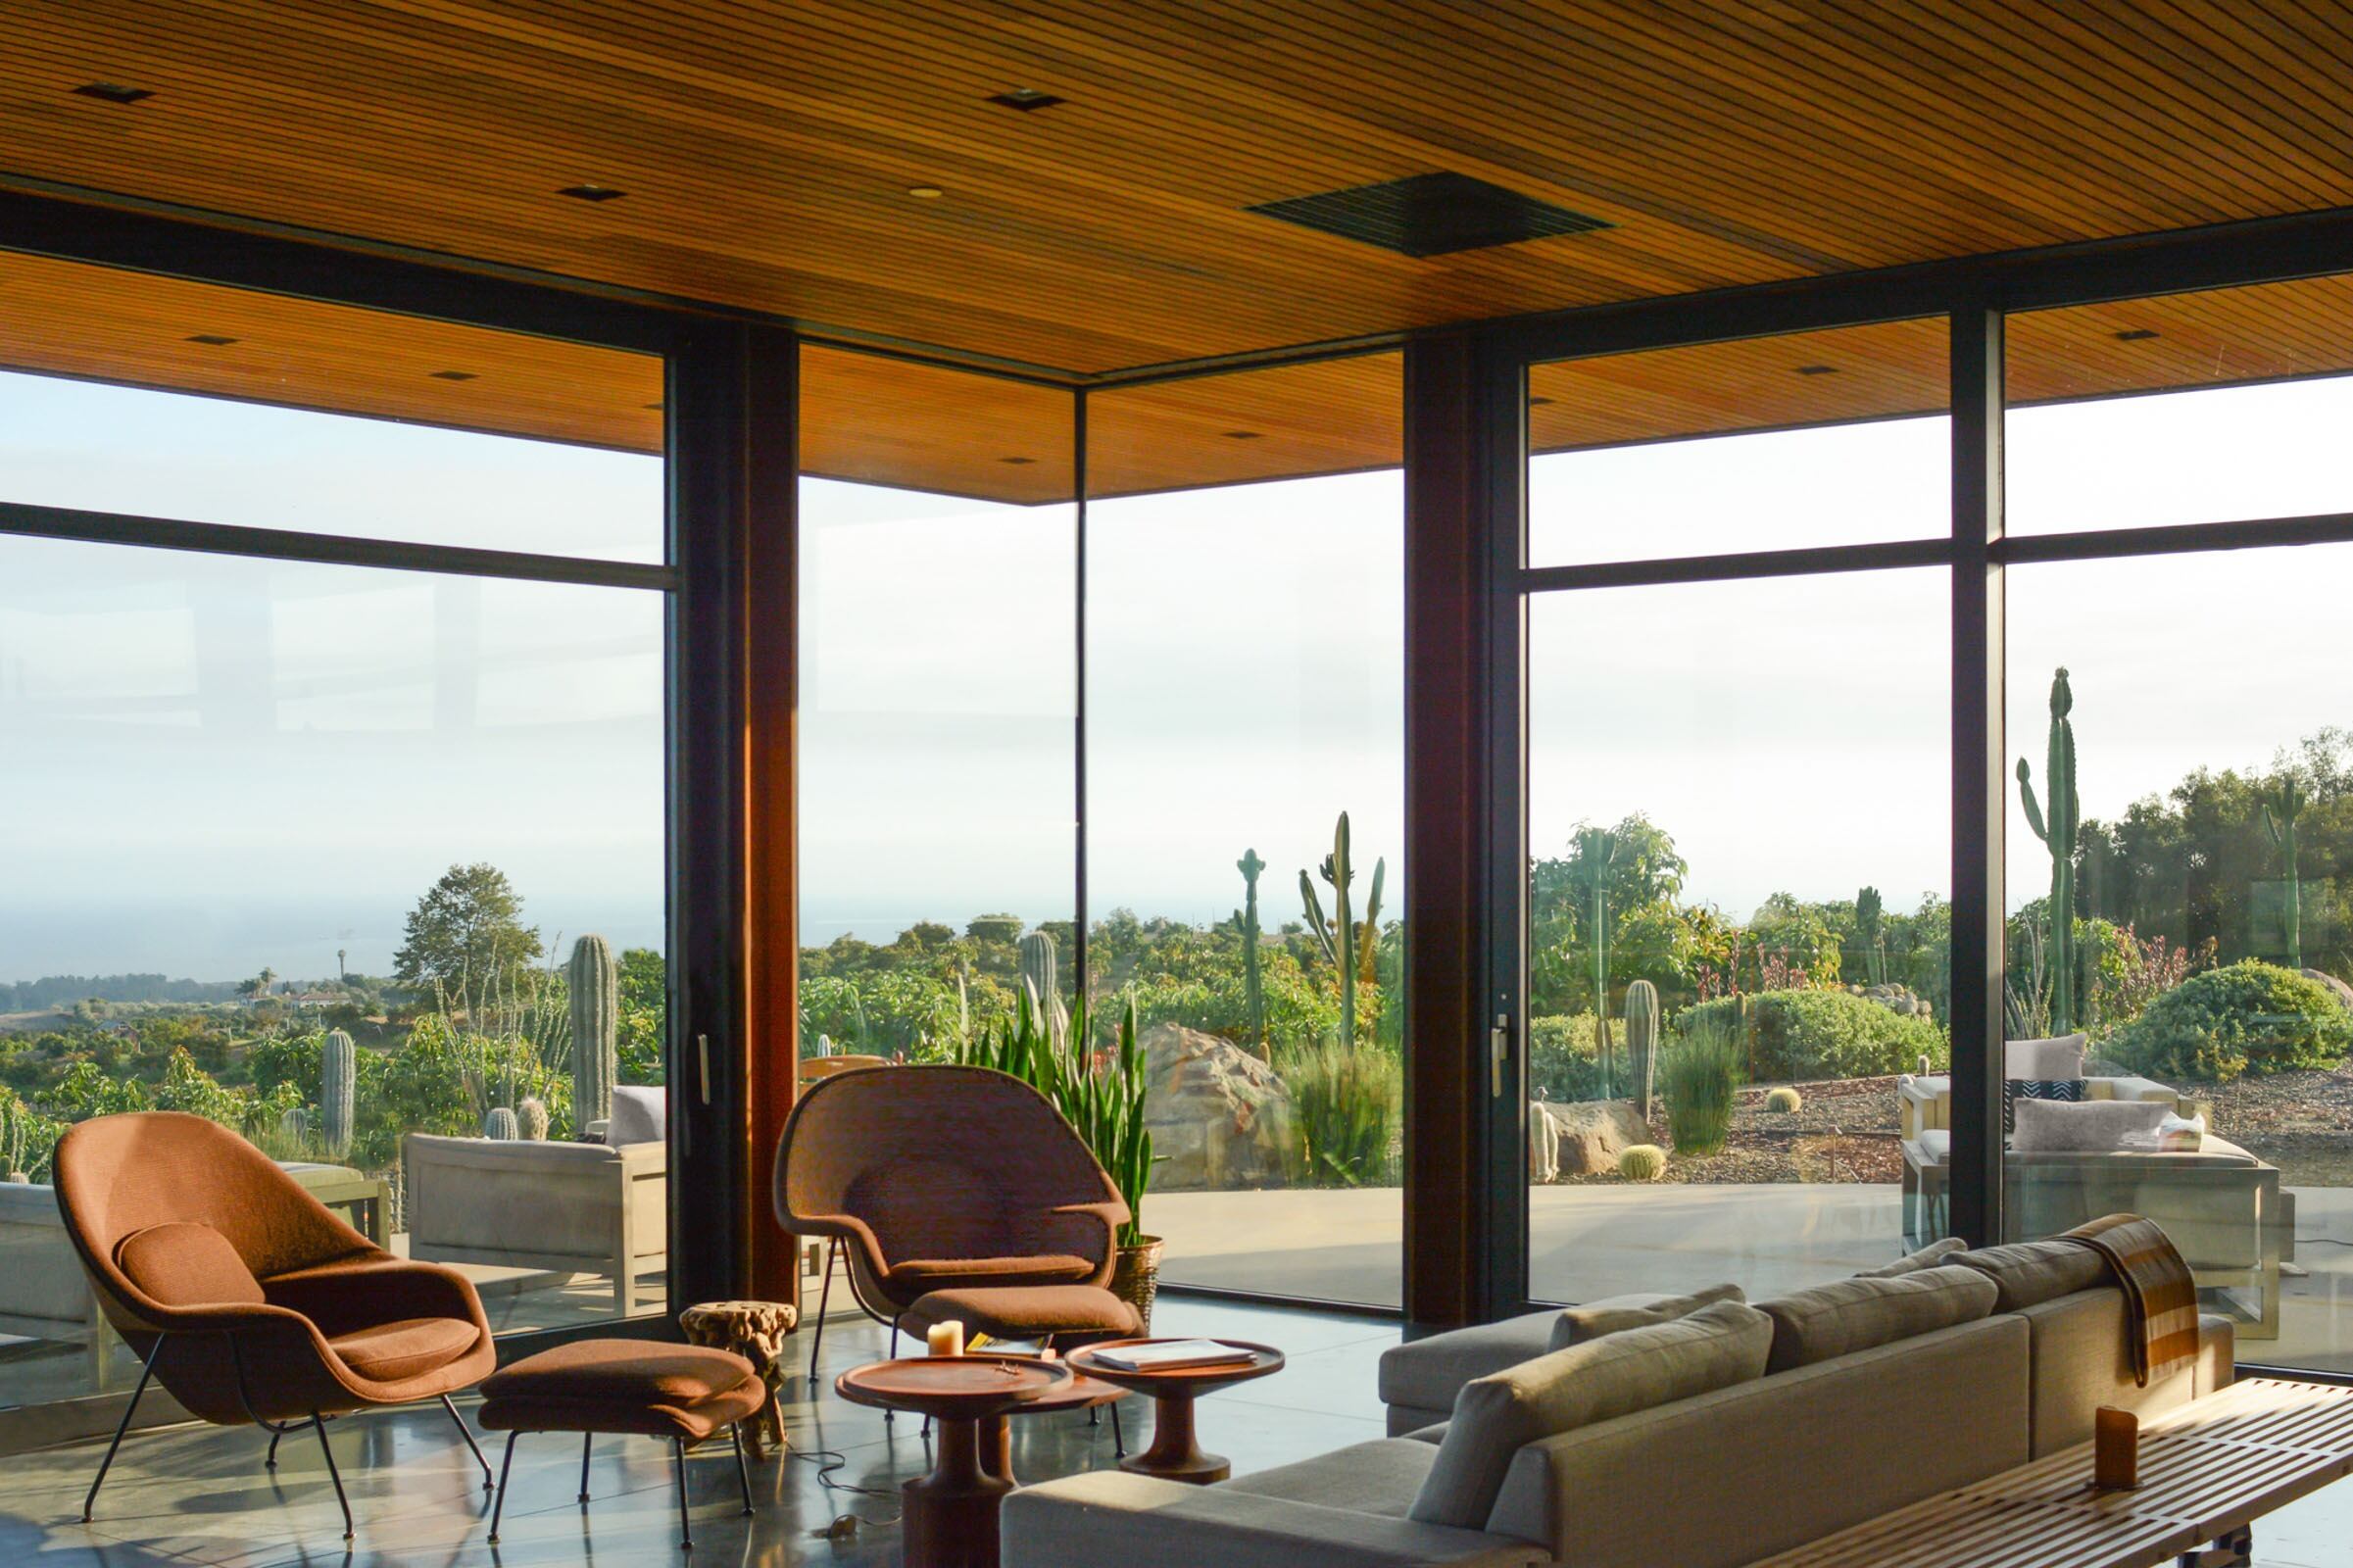 Tea House: A Tribute to Santa Barbara’s Modernist Legacy